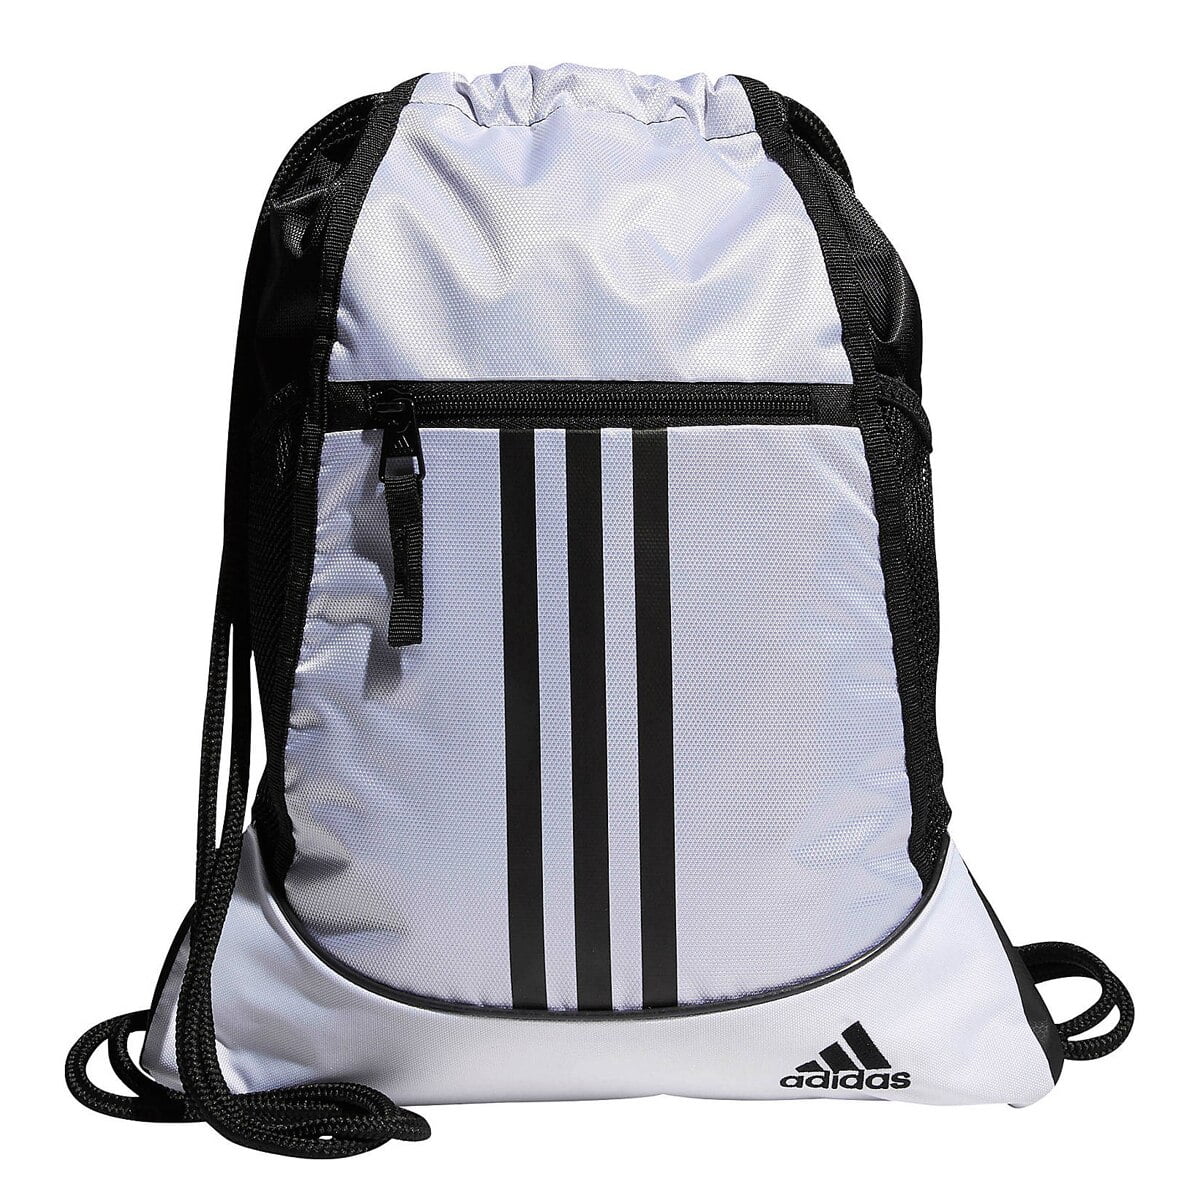 VERSAL Gym Sack Gymsack Drawstring Bag Phase Sports Training Travel Bags Black 